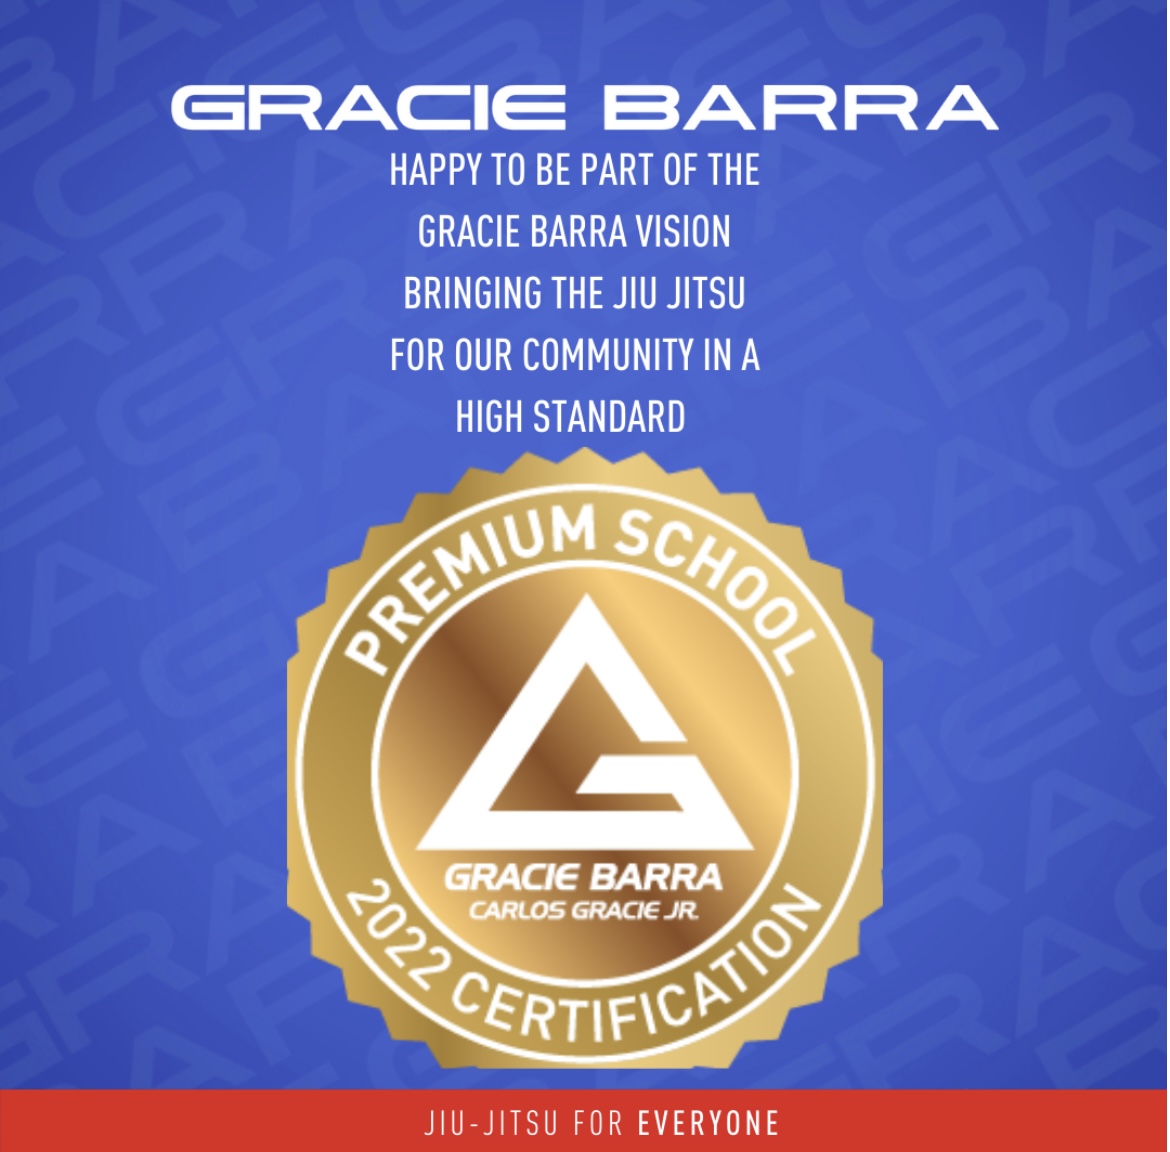 Gracie Barra Glasgow – a Premium School